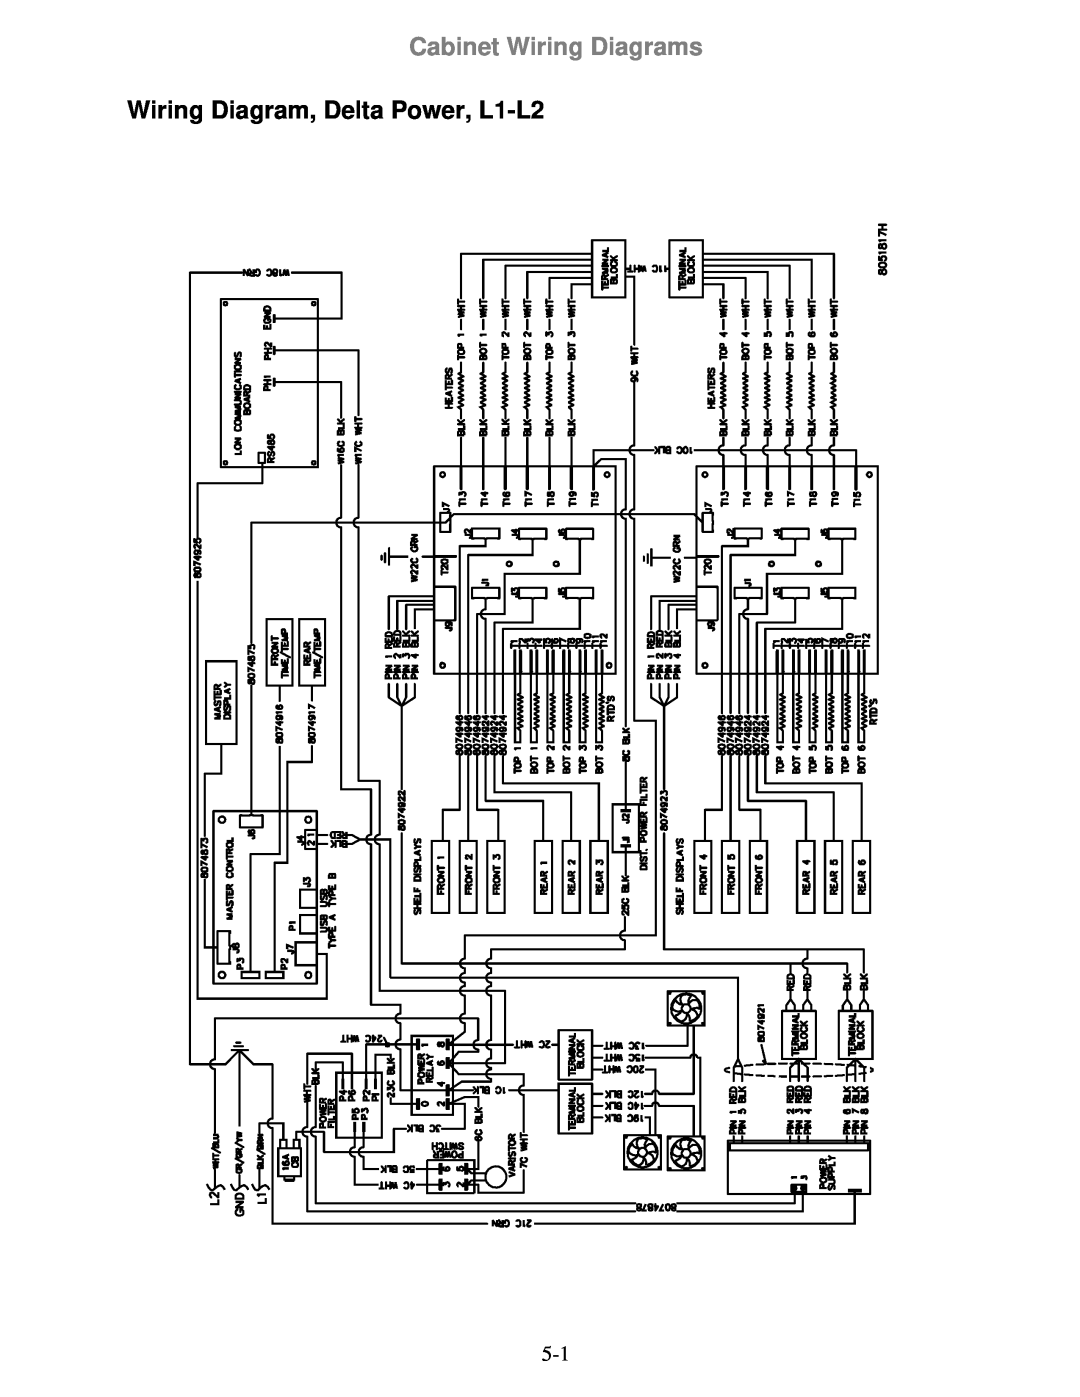 Frymaster UHC-HD manual Cabinet Wiring Diagrams, Wiring Diagram, Delta Power, L1-L2 